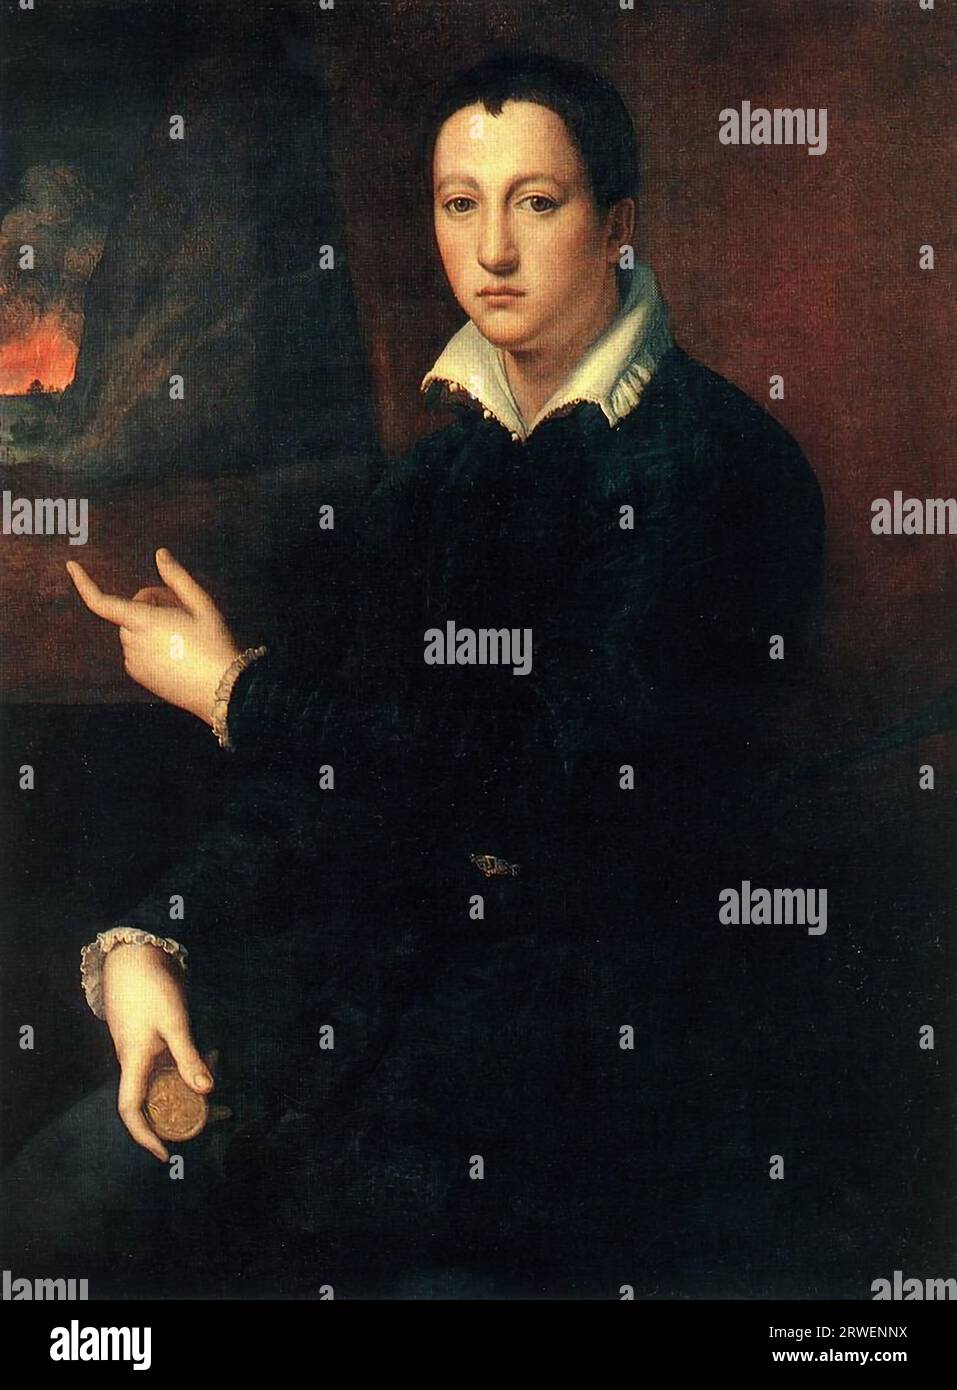 Portrait of a boy, painting by Agnolo Bronzino, Agnolo di Cosimo di Mariano, also Agnolo Tori, called Bronzino, Historical, digitally restored reproduction from a 19th century original. Stock Photo